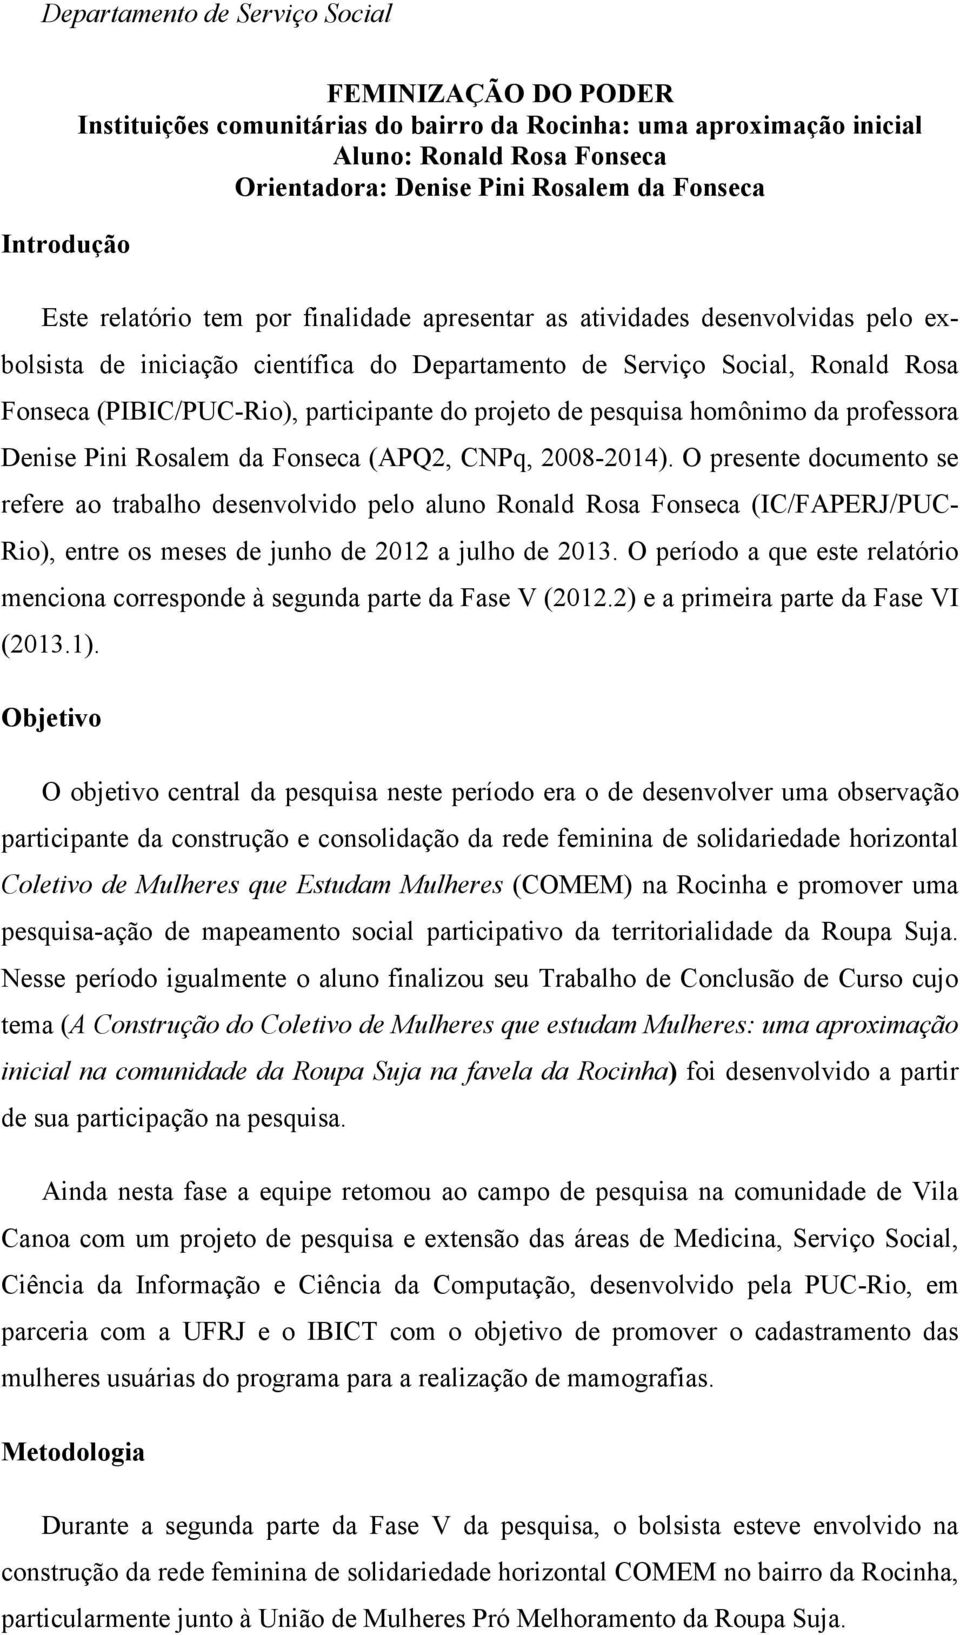 homônimo da professora Denise Pini Rosalem da Fonseca (APQ2, CNPq, 2008-2014).